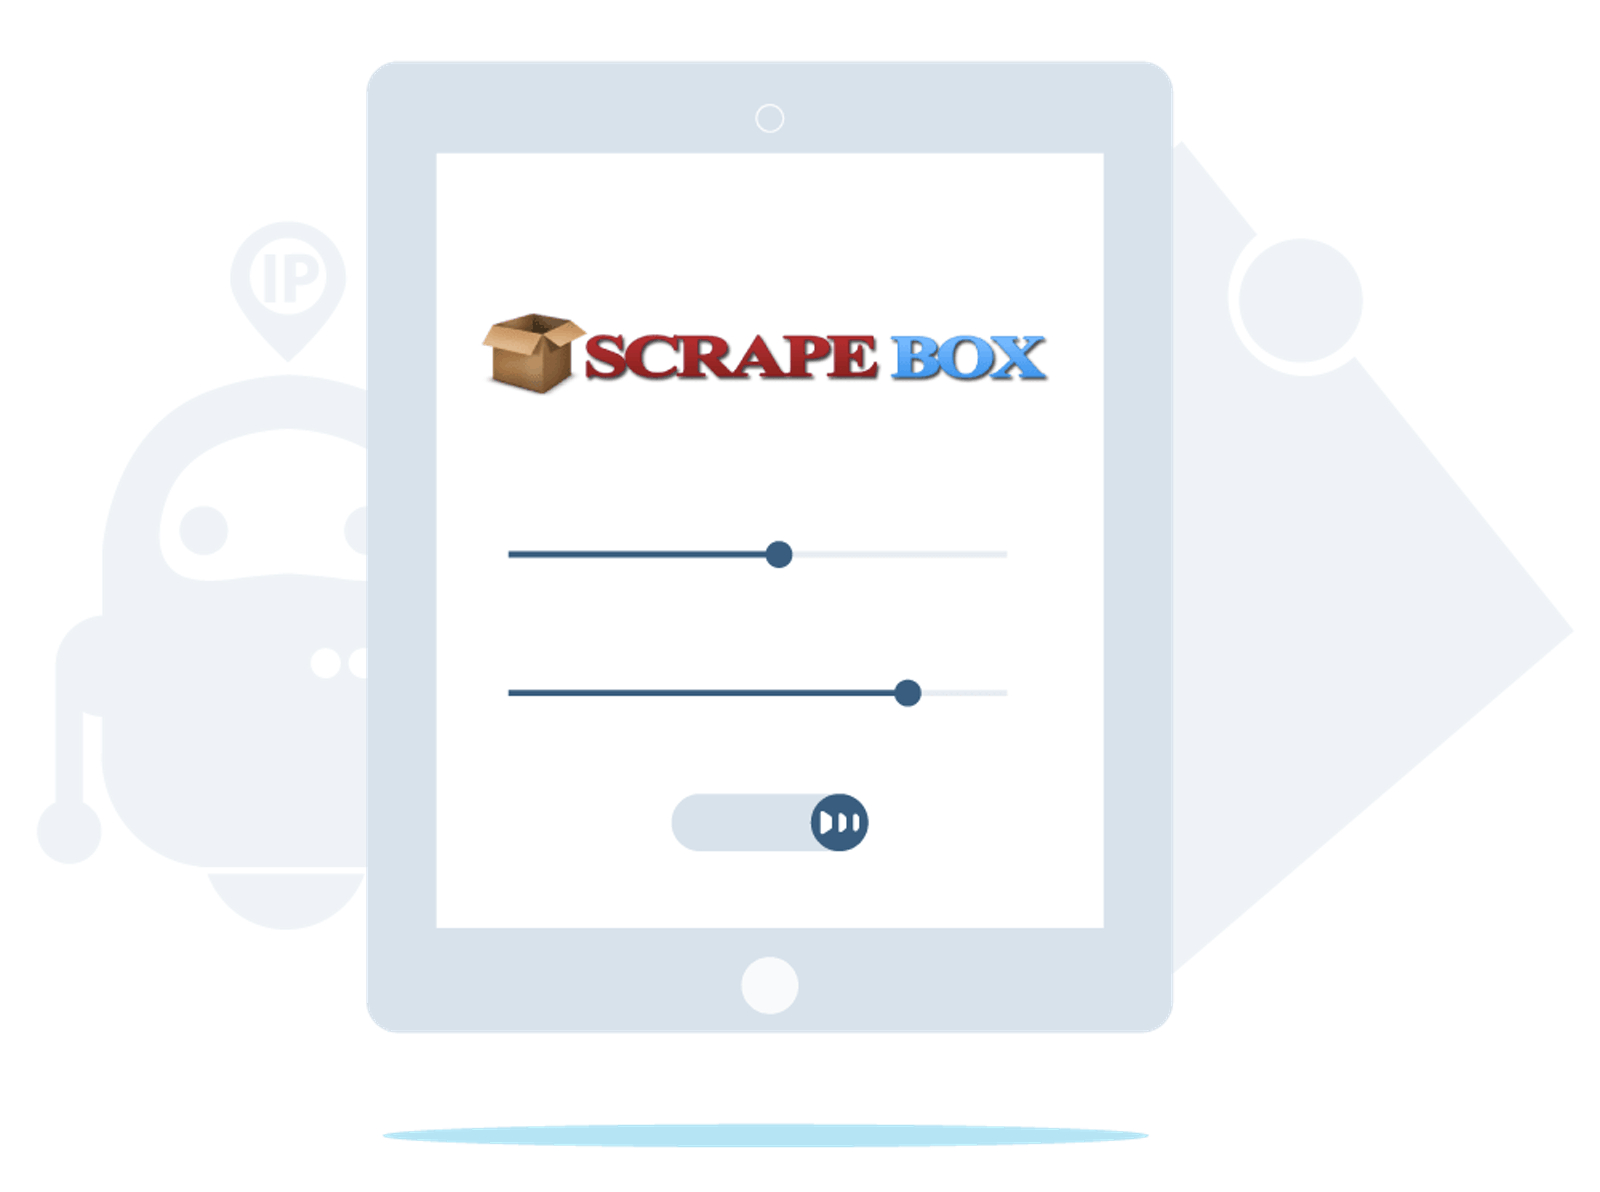 Scrape box